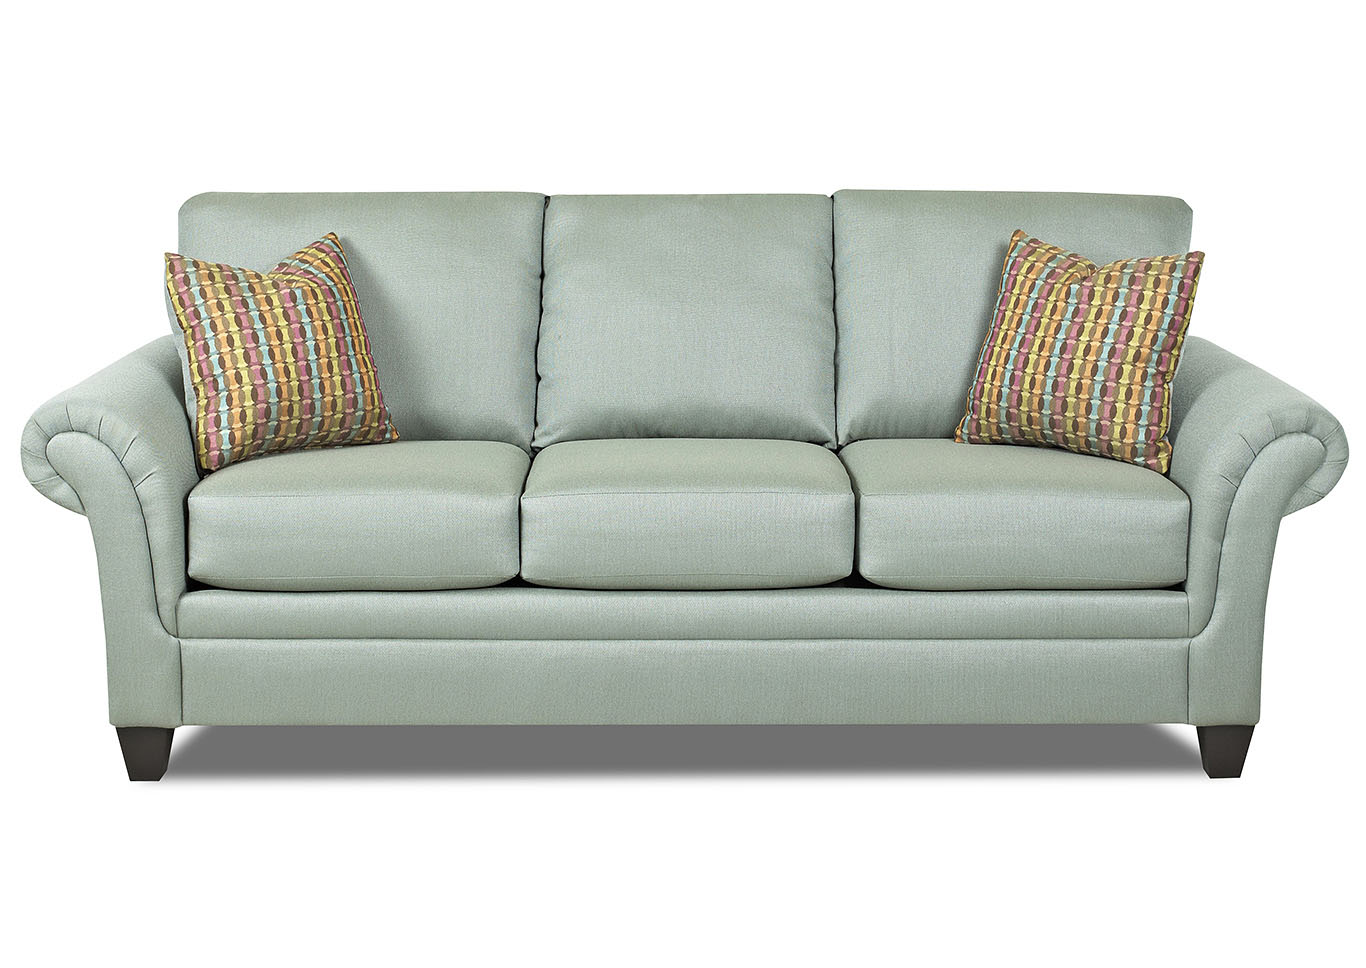 Hubbard Green Stationary Fabric Sofa,Klaussner Home Furnishings